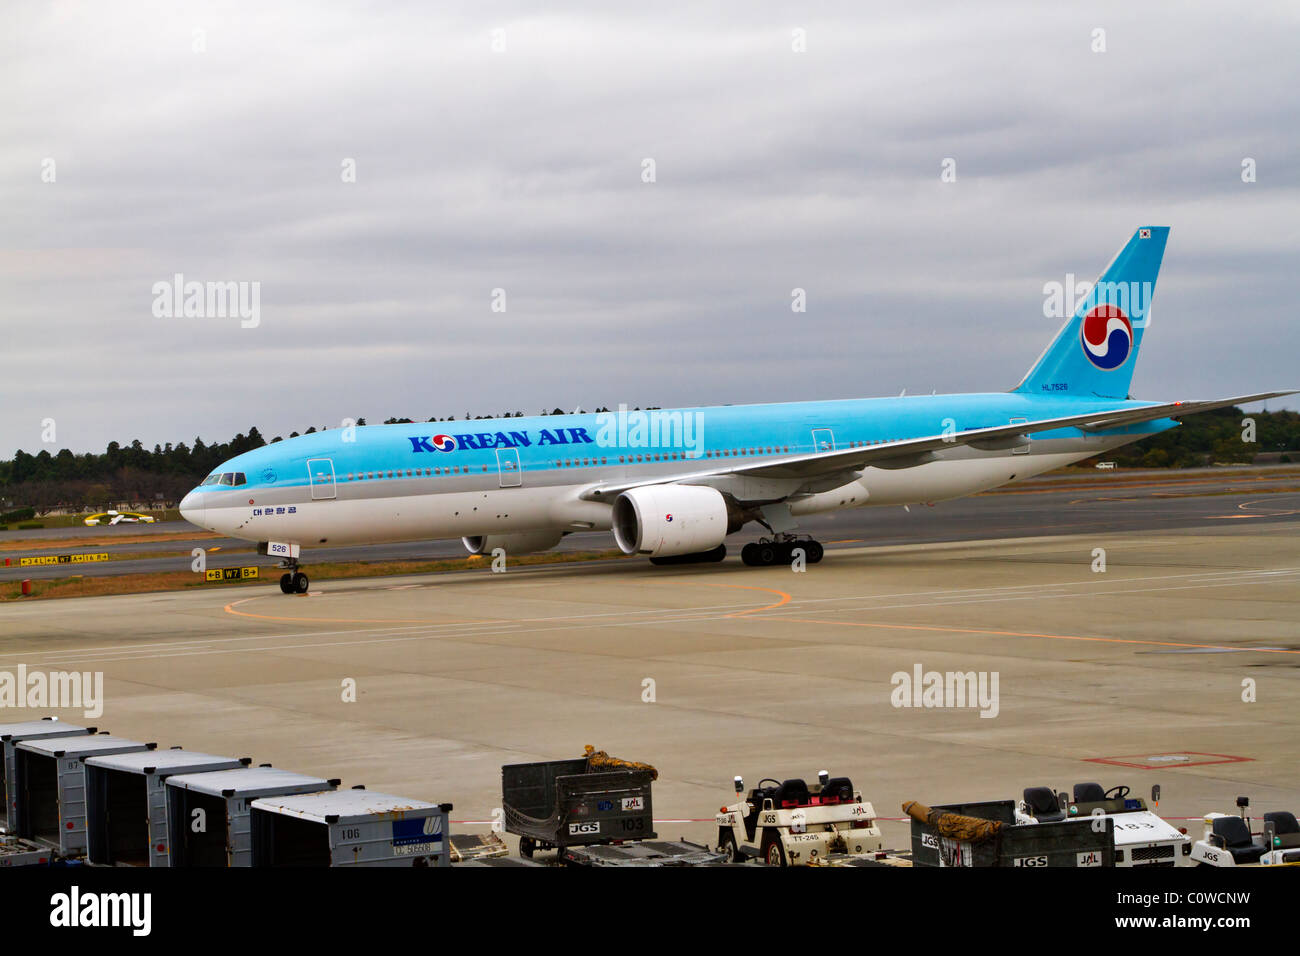 Korean asiana airlines -Fotos und -Bildmaterial in hoher Auflösung – Alamy